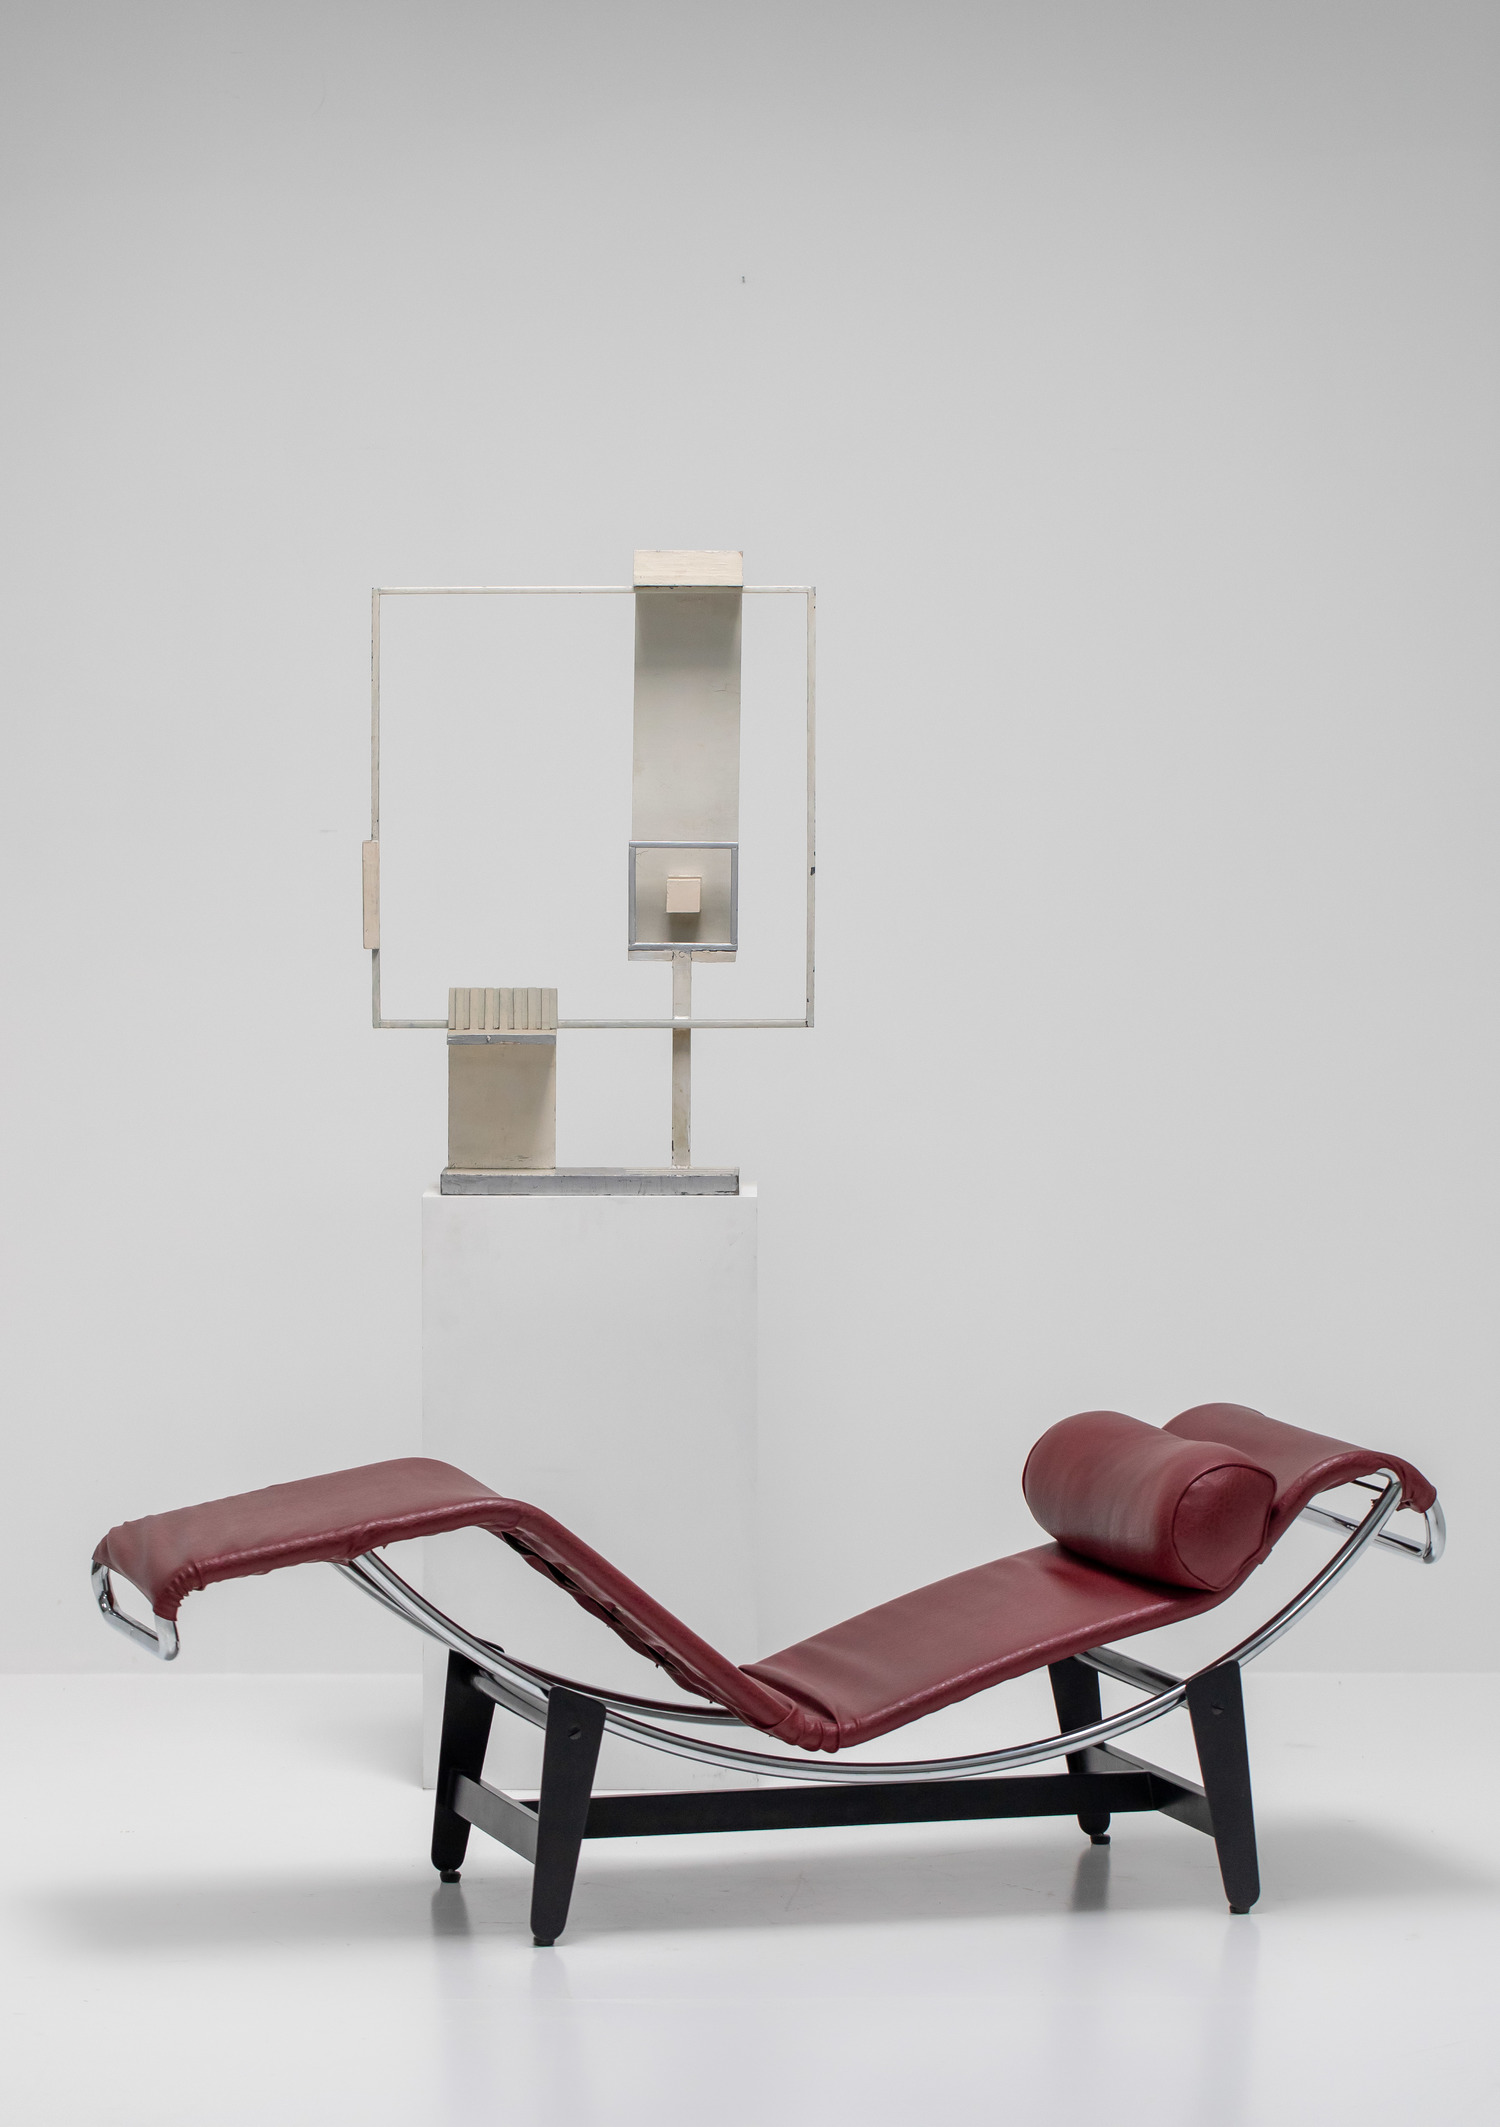 Le Corbusier 'B306' chaise longue by Wohnbedarf